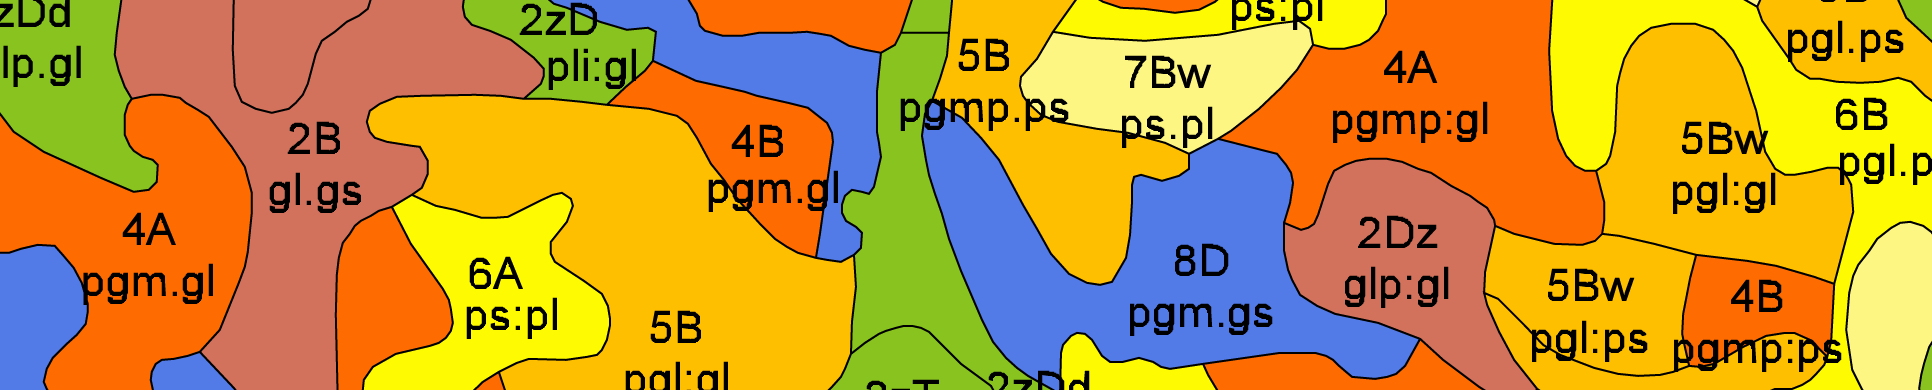 Numeryczna mapa